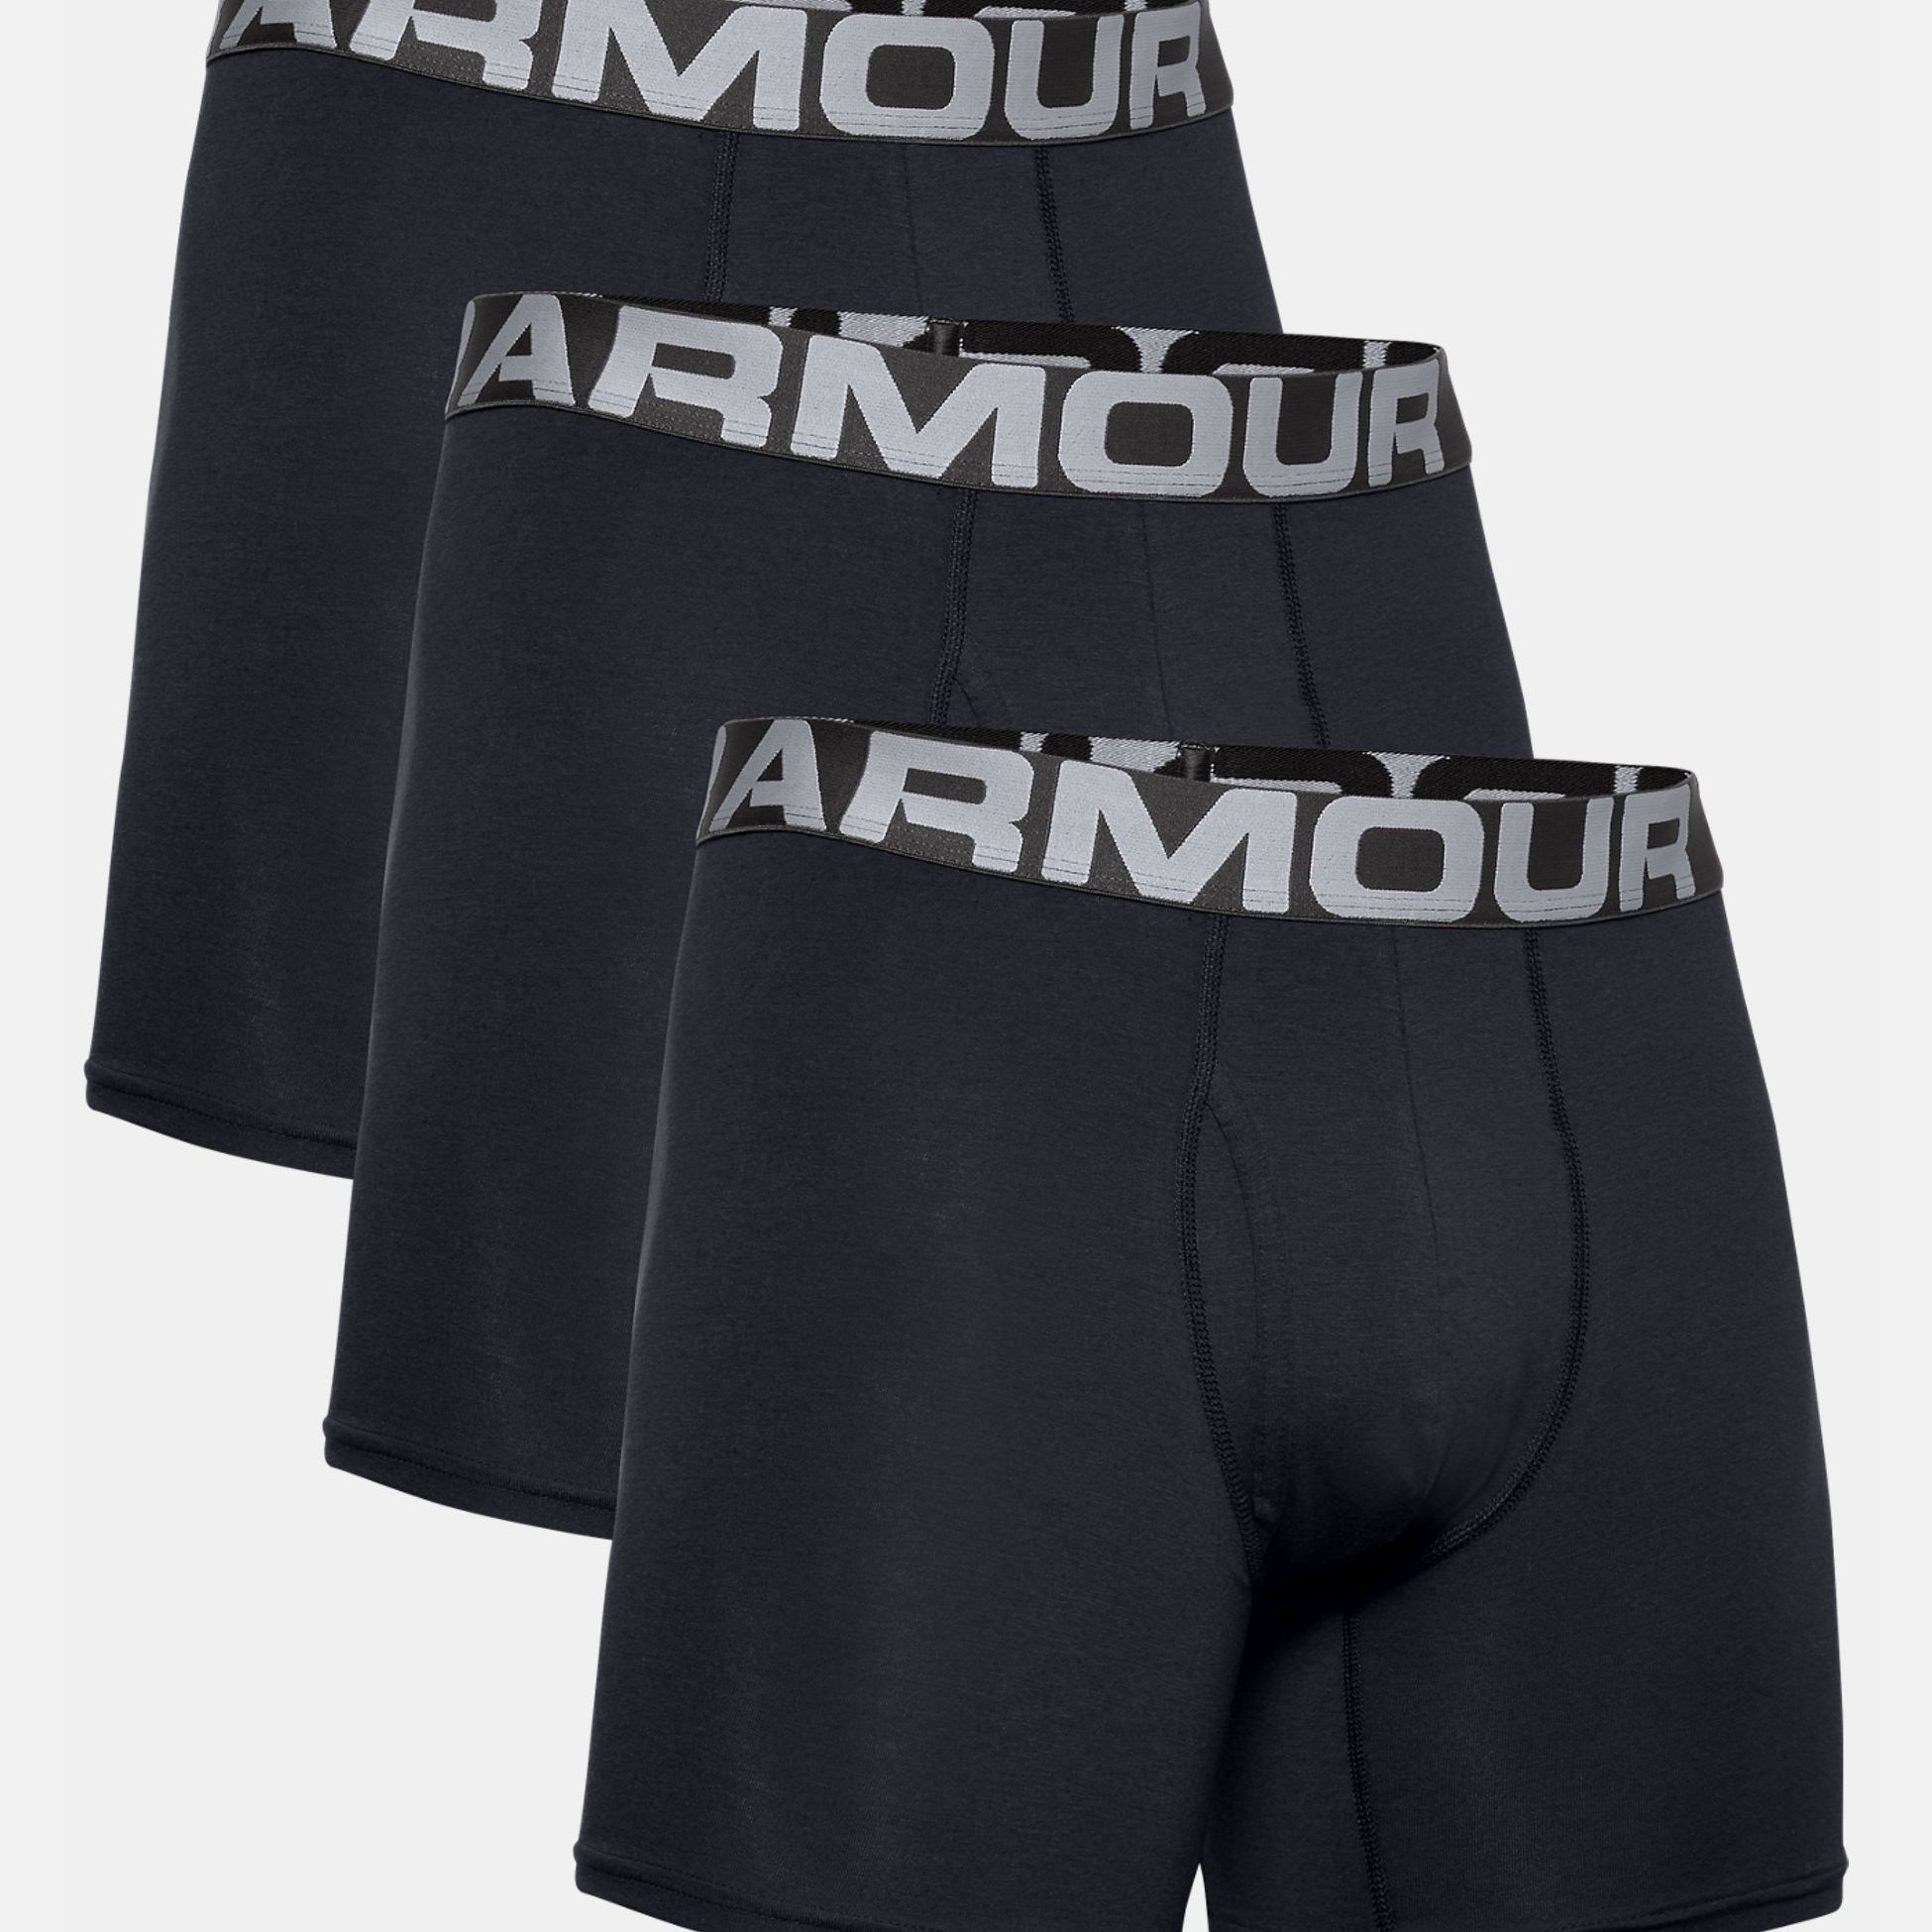 Underwear -  under armour Charged Cotton 6inch Boxerjock 3 Pack 